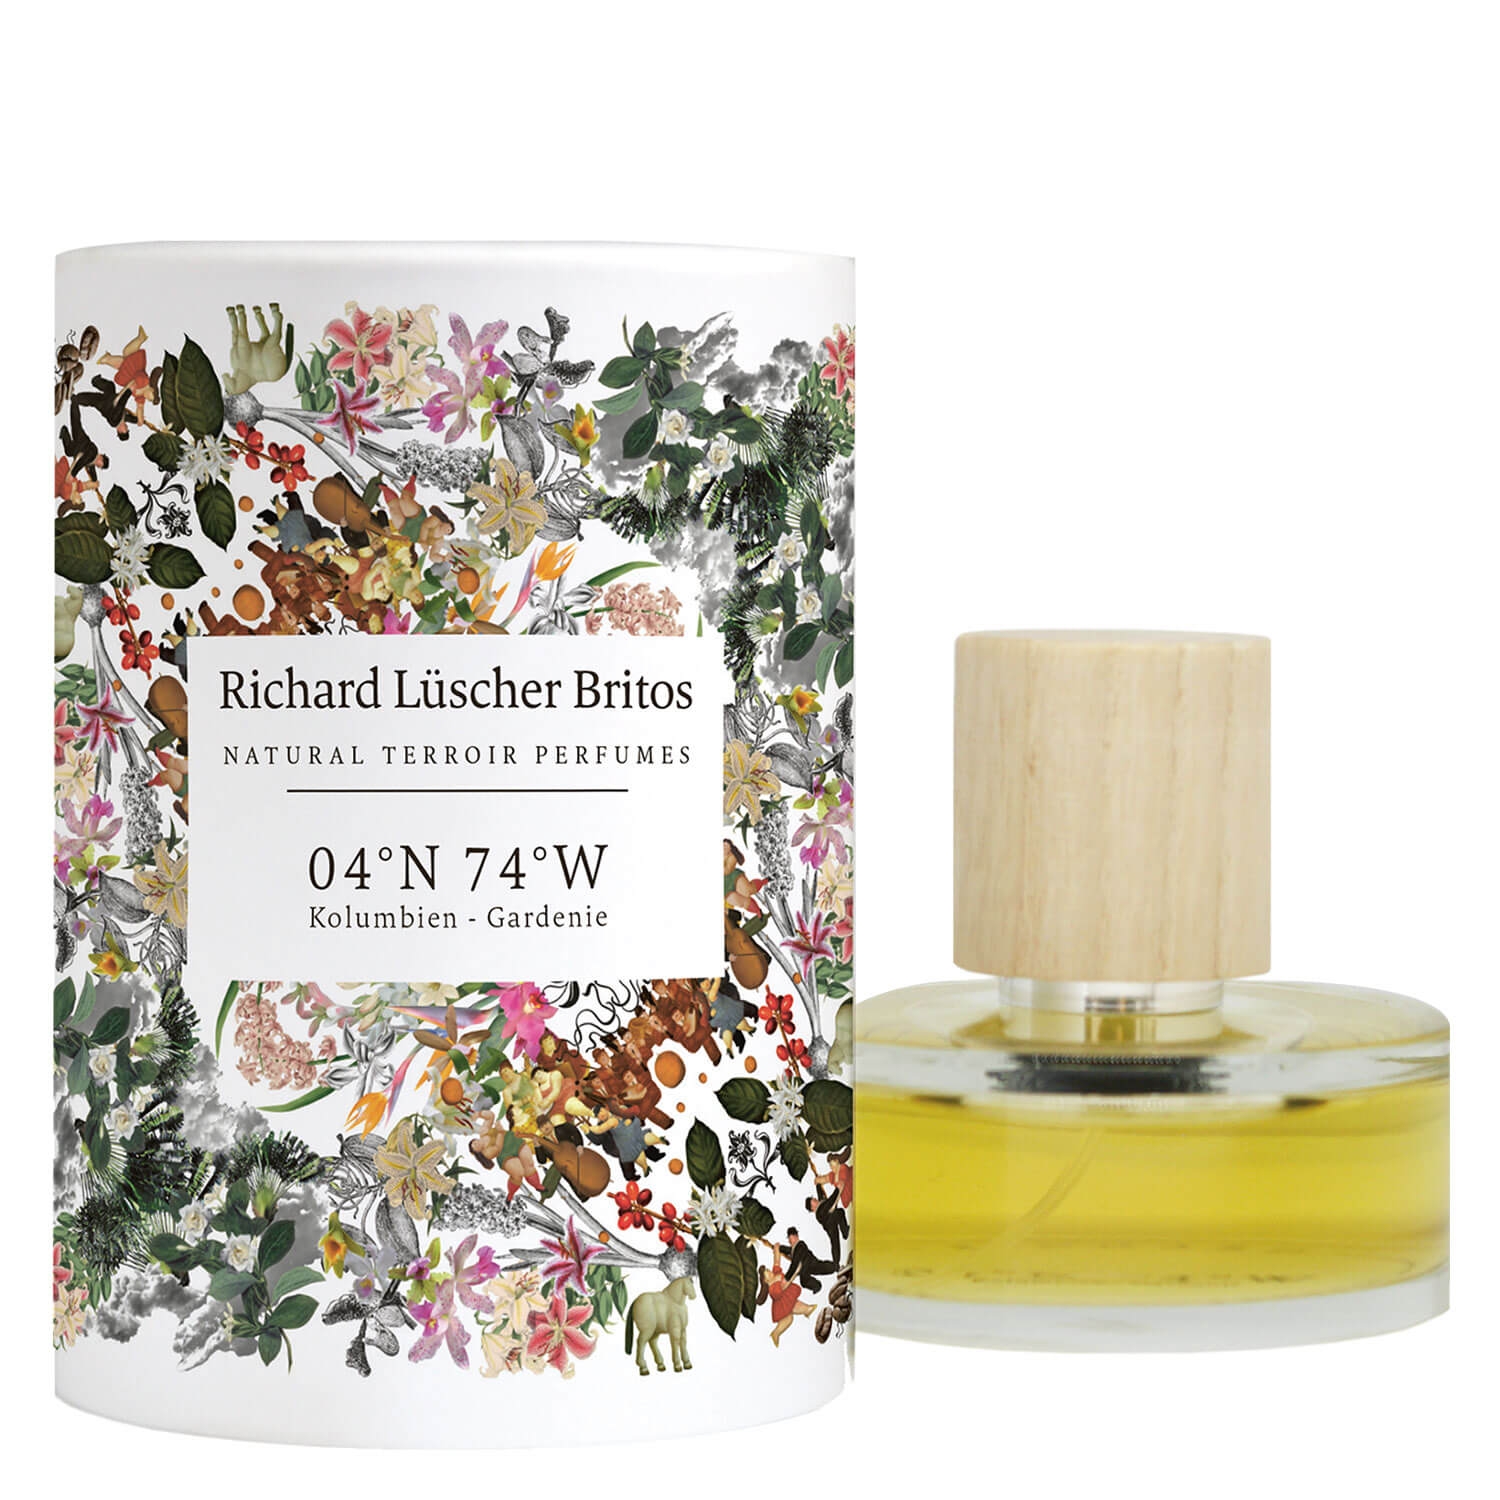 Image du produit de Farfalla Fragrance - 04°N 74°W Kolumbien Gardenie Natural Terroir Parfum